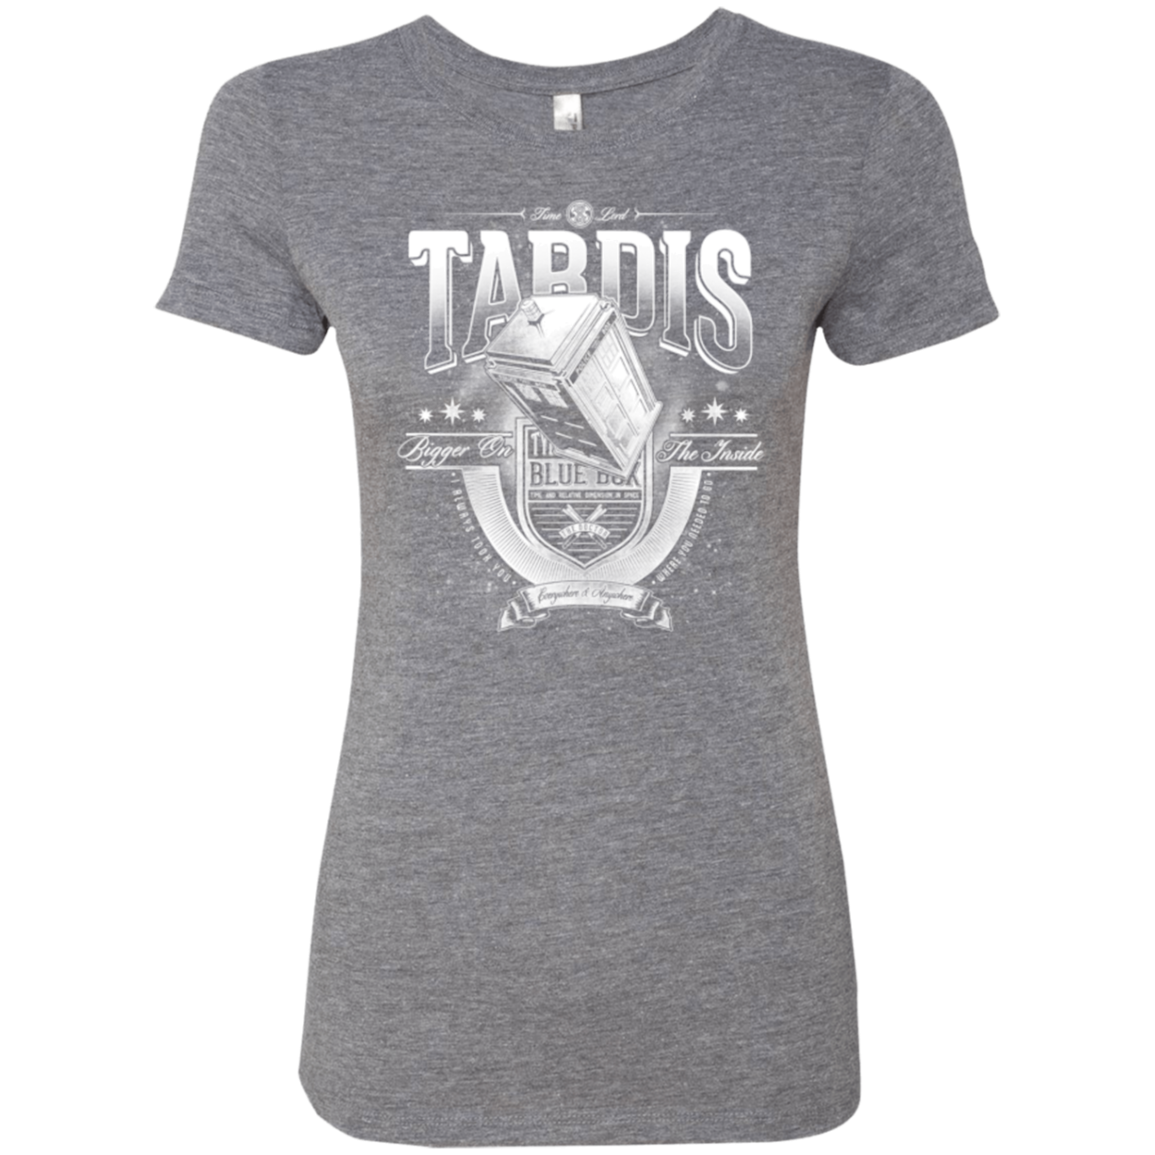 Tardis Women's Triblend T-Shirt